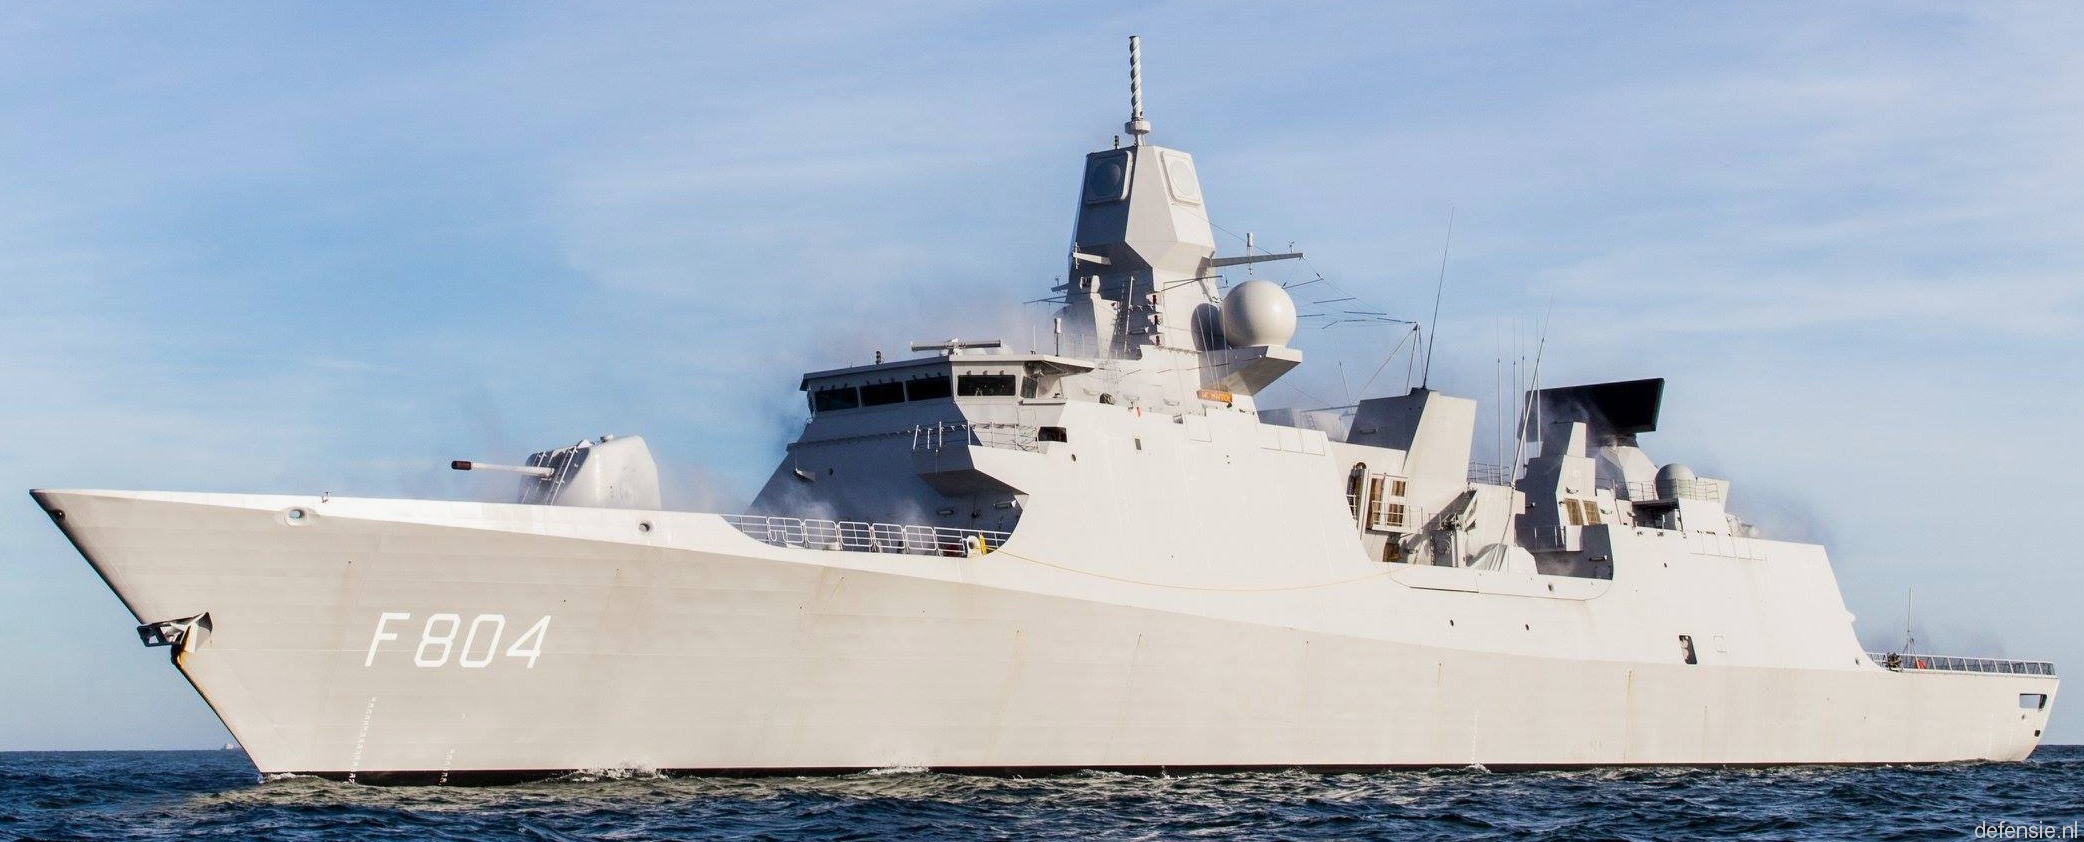 f-804 hnlms de ruyter guided missile frigate ffg lcf royal netherlands navy 27